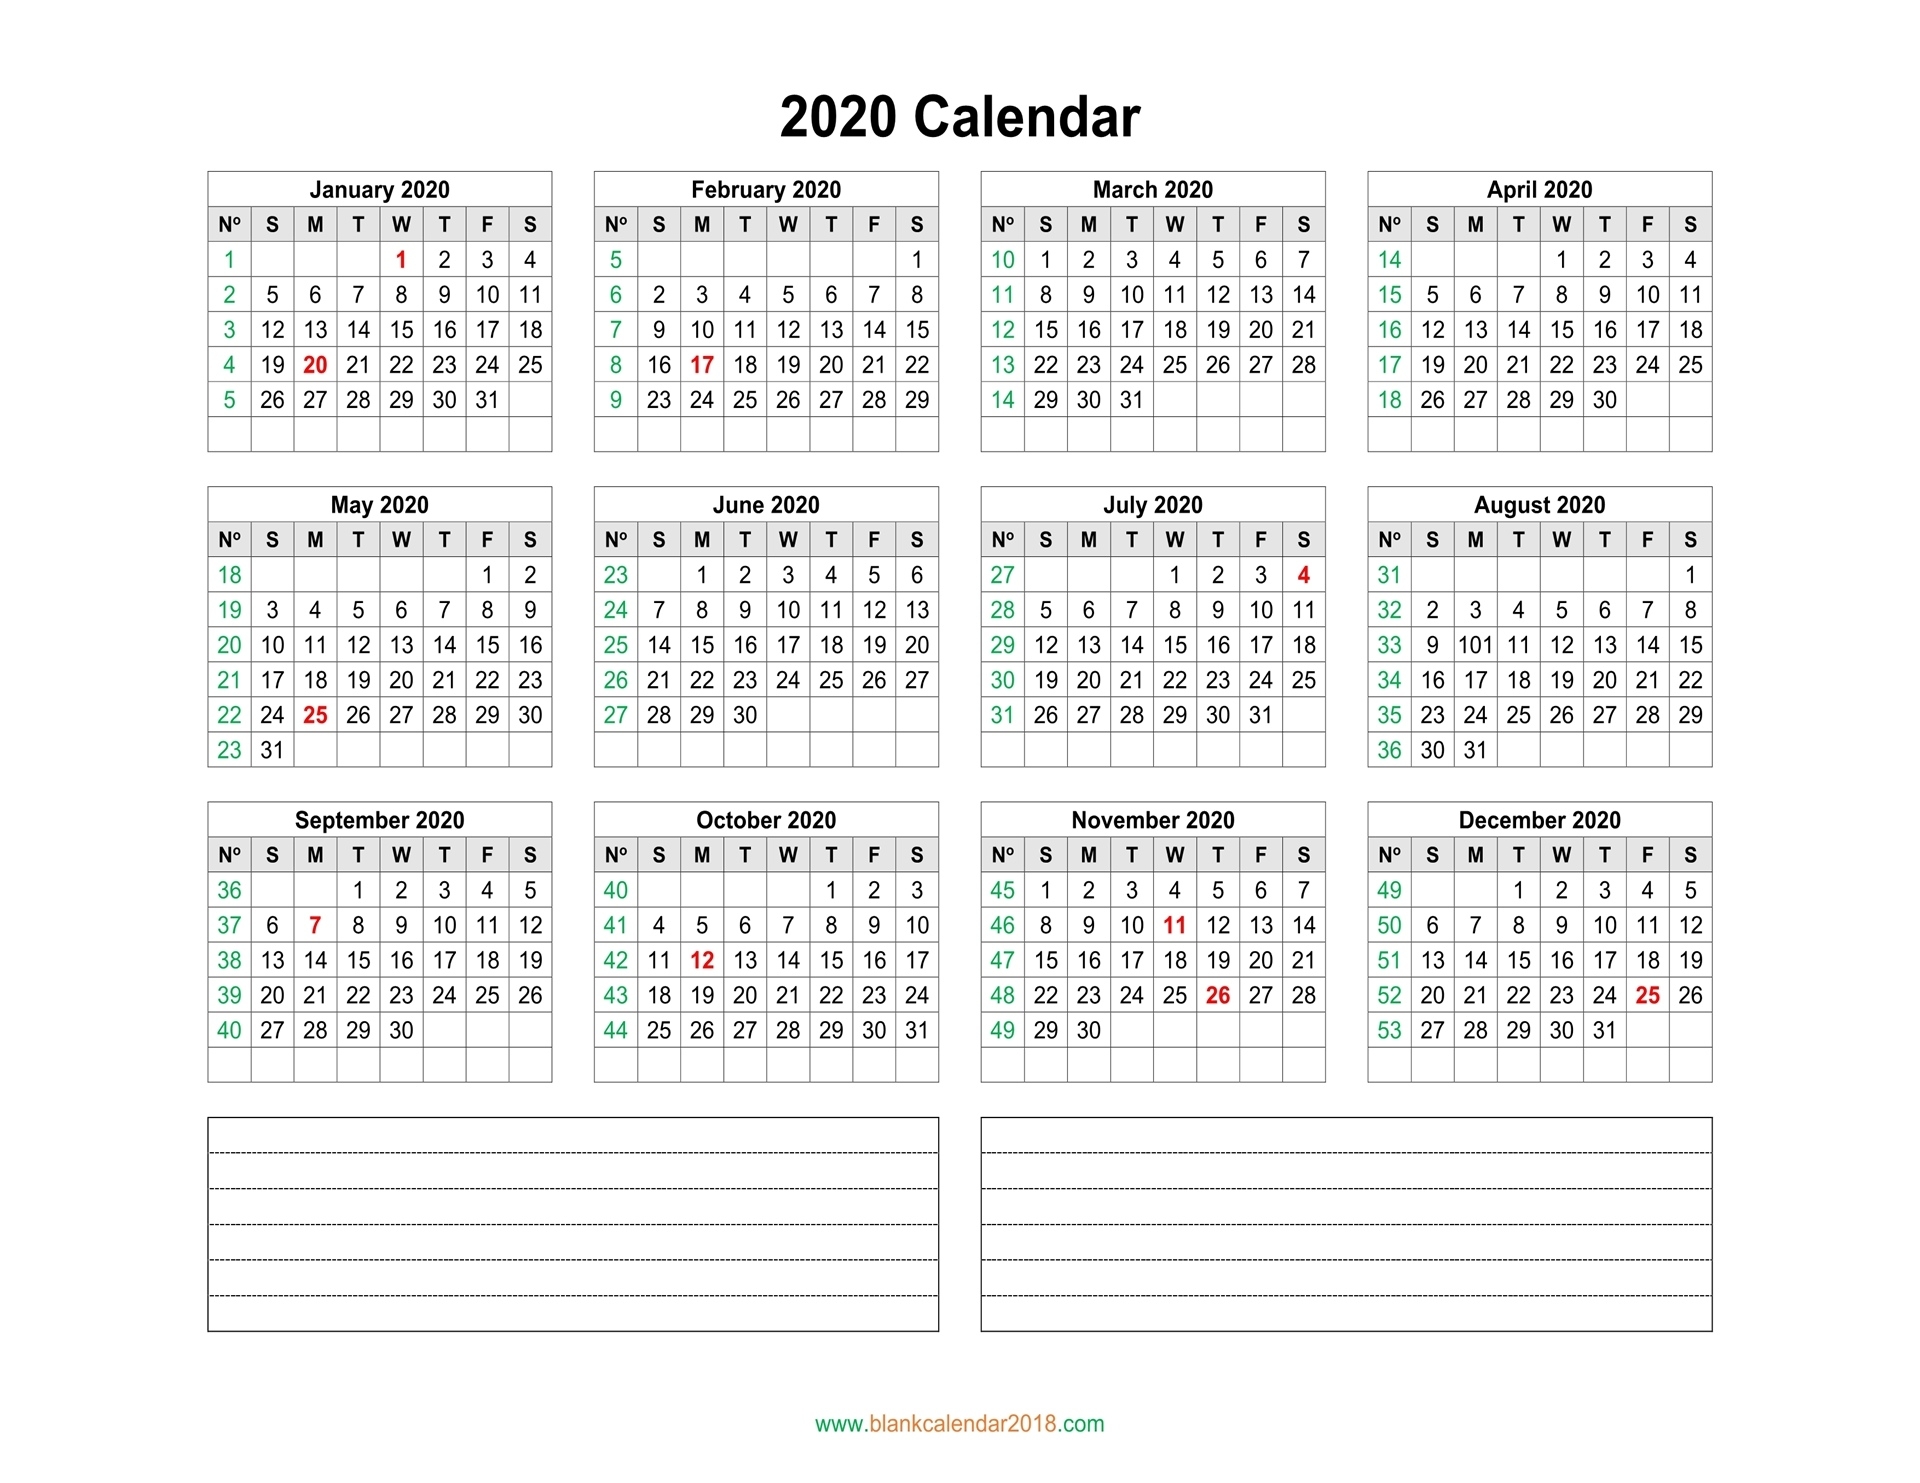 Blank Calendar 2020 Dashing 2020 Calendar With Days Numbered